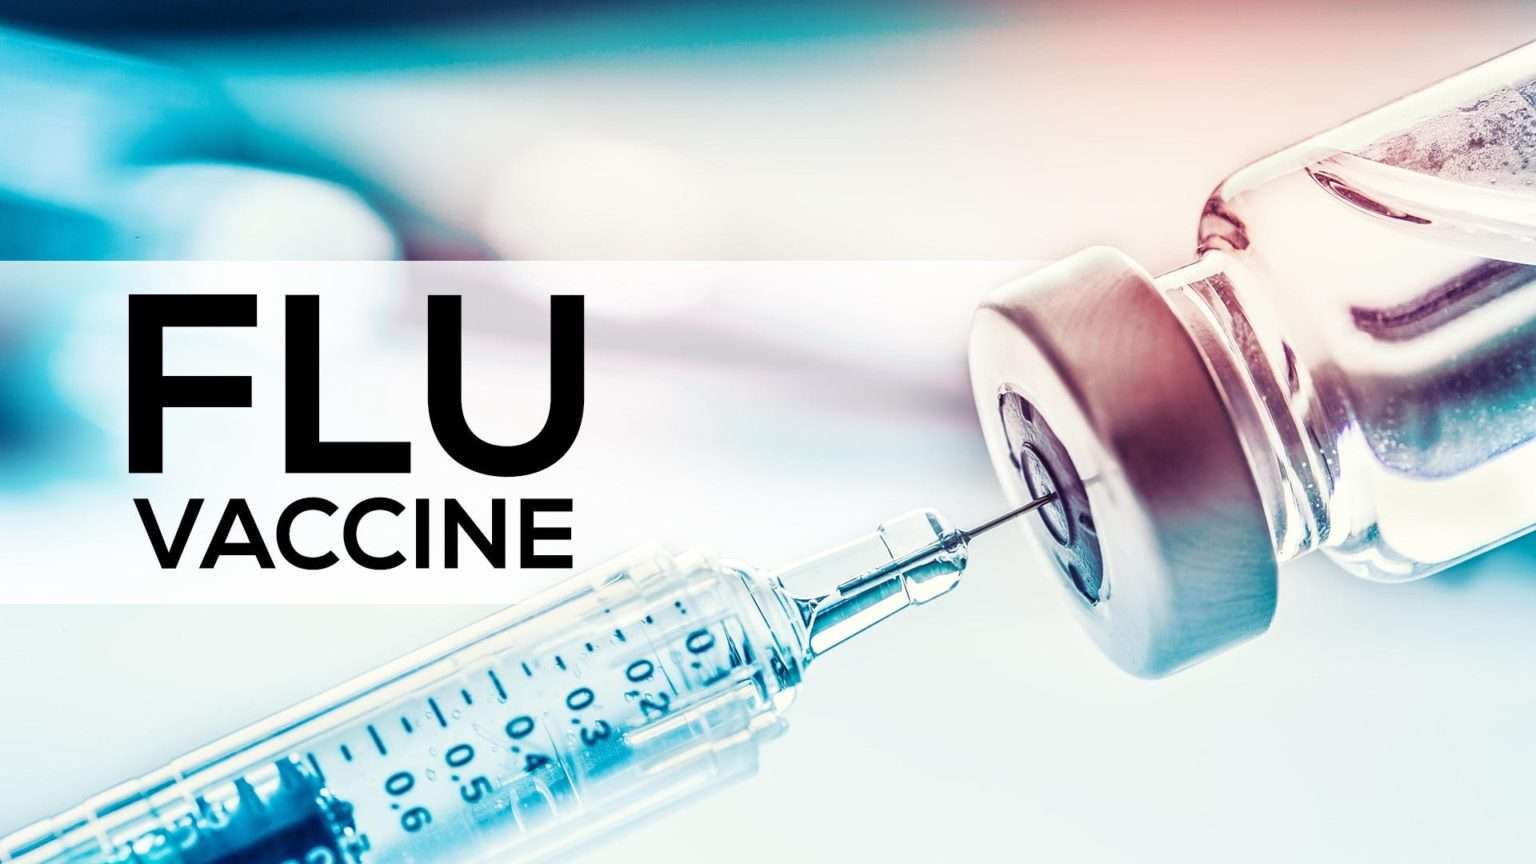 Flu vaccinations